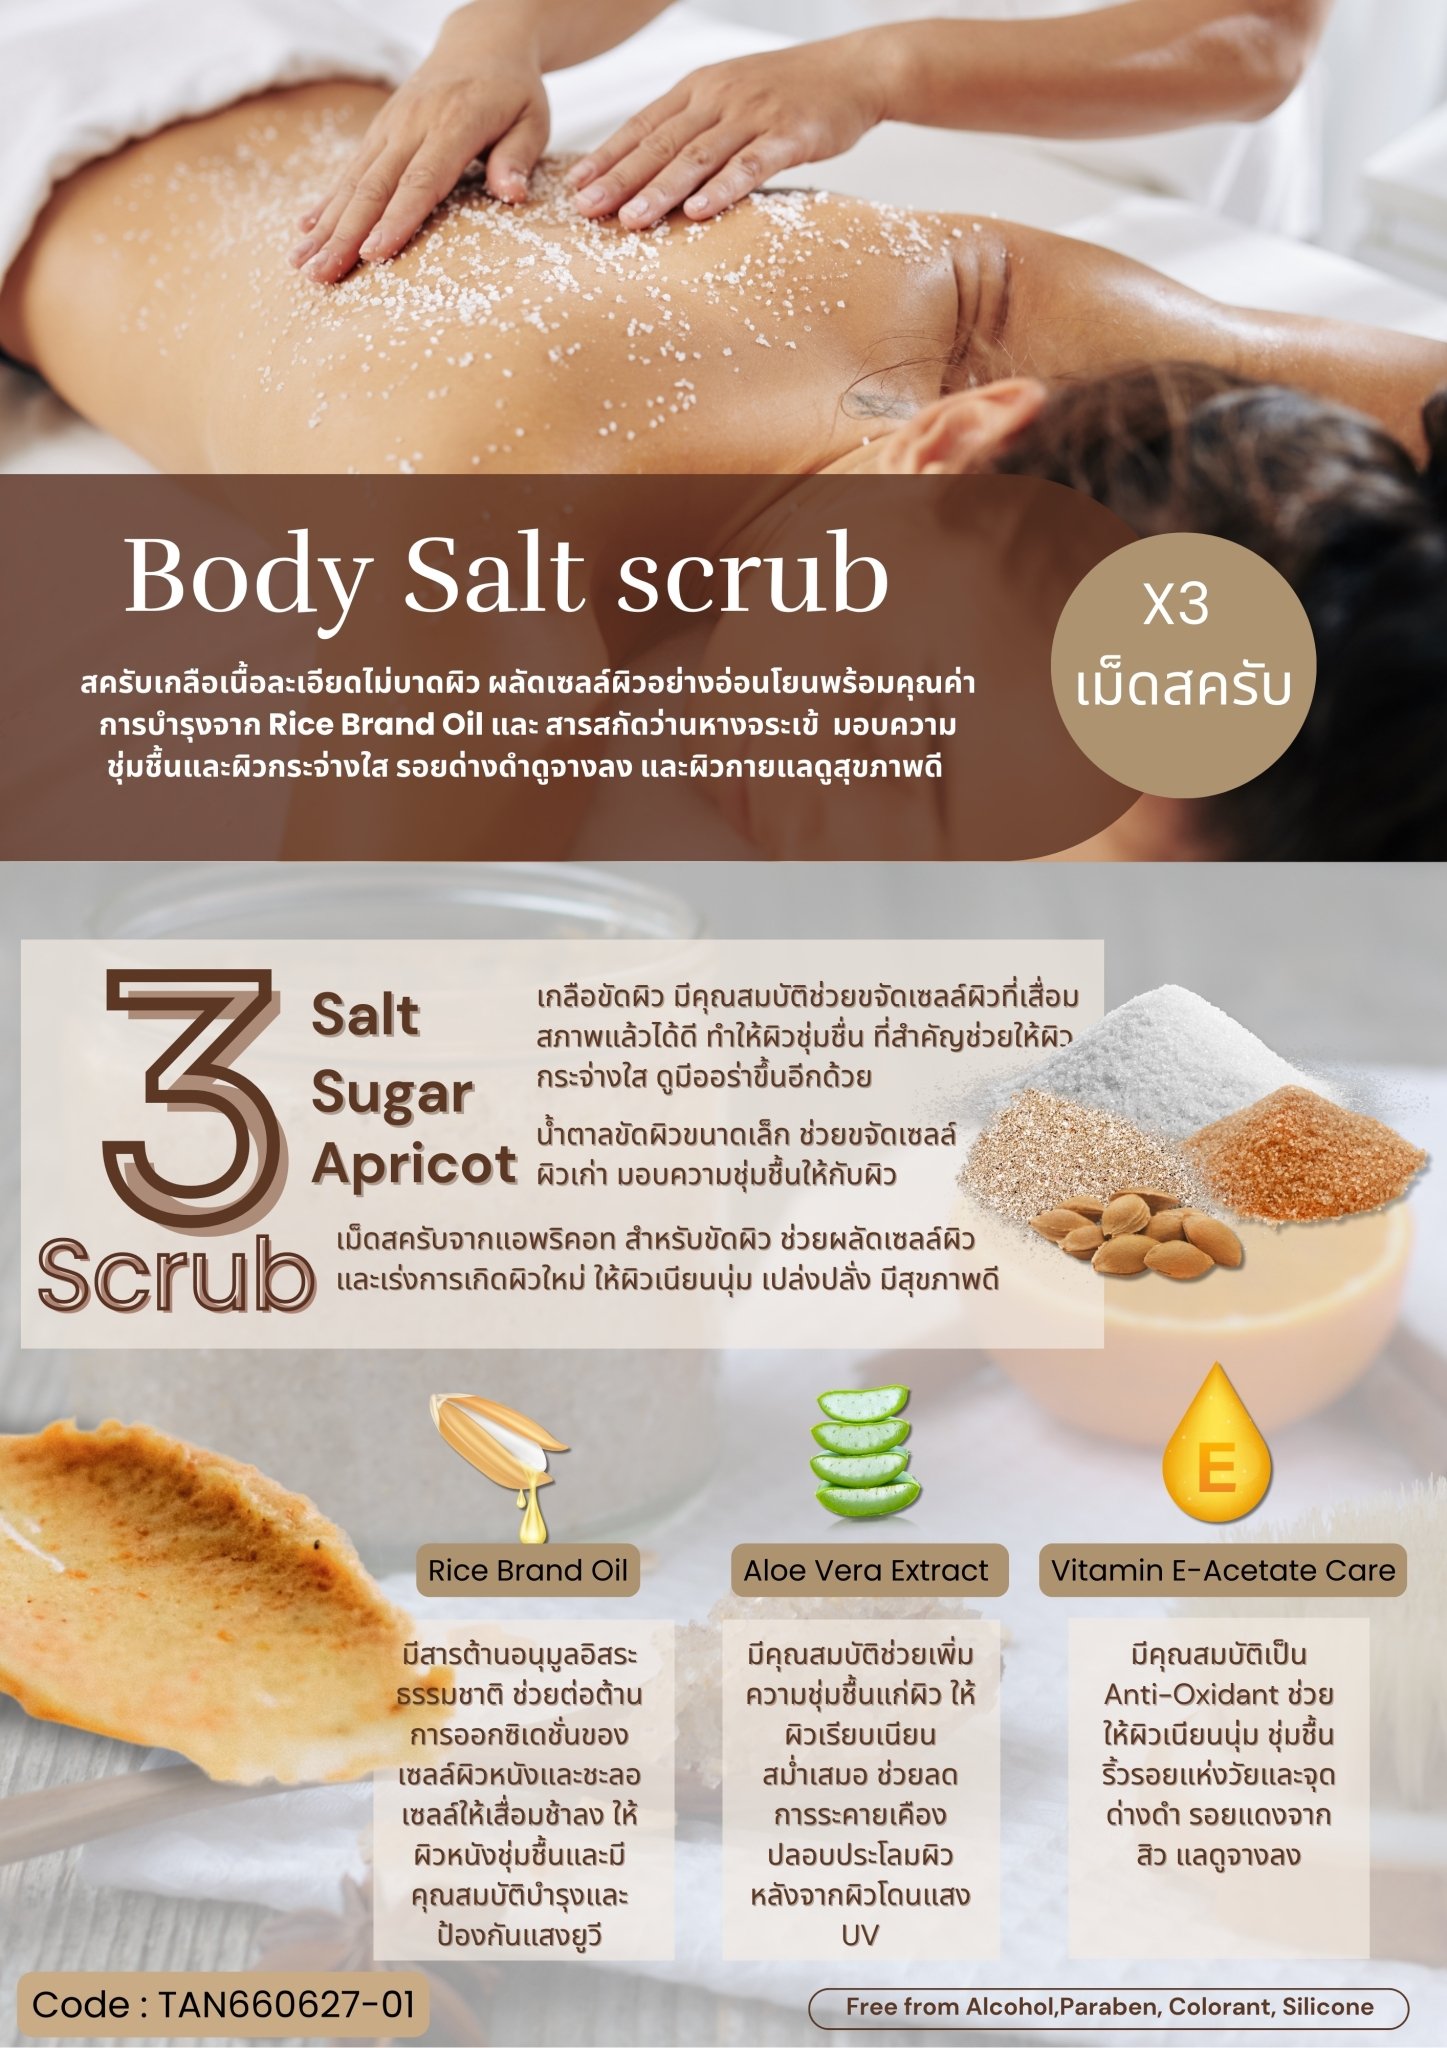 Body Salt scrub